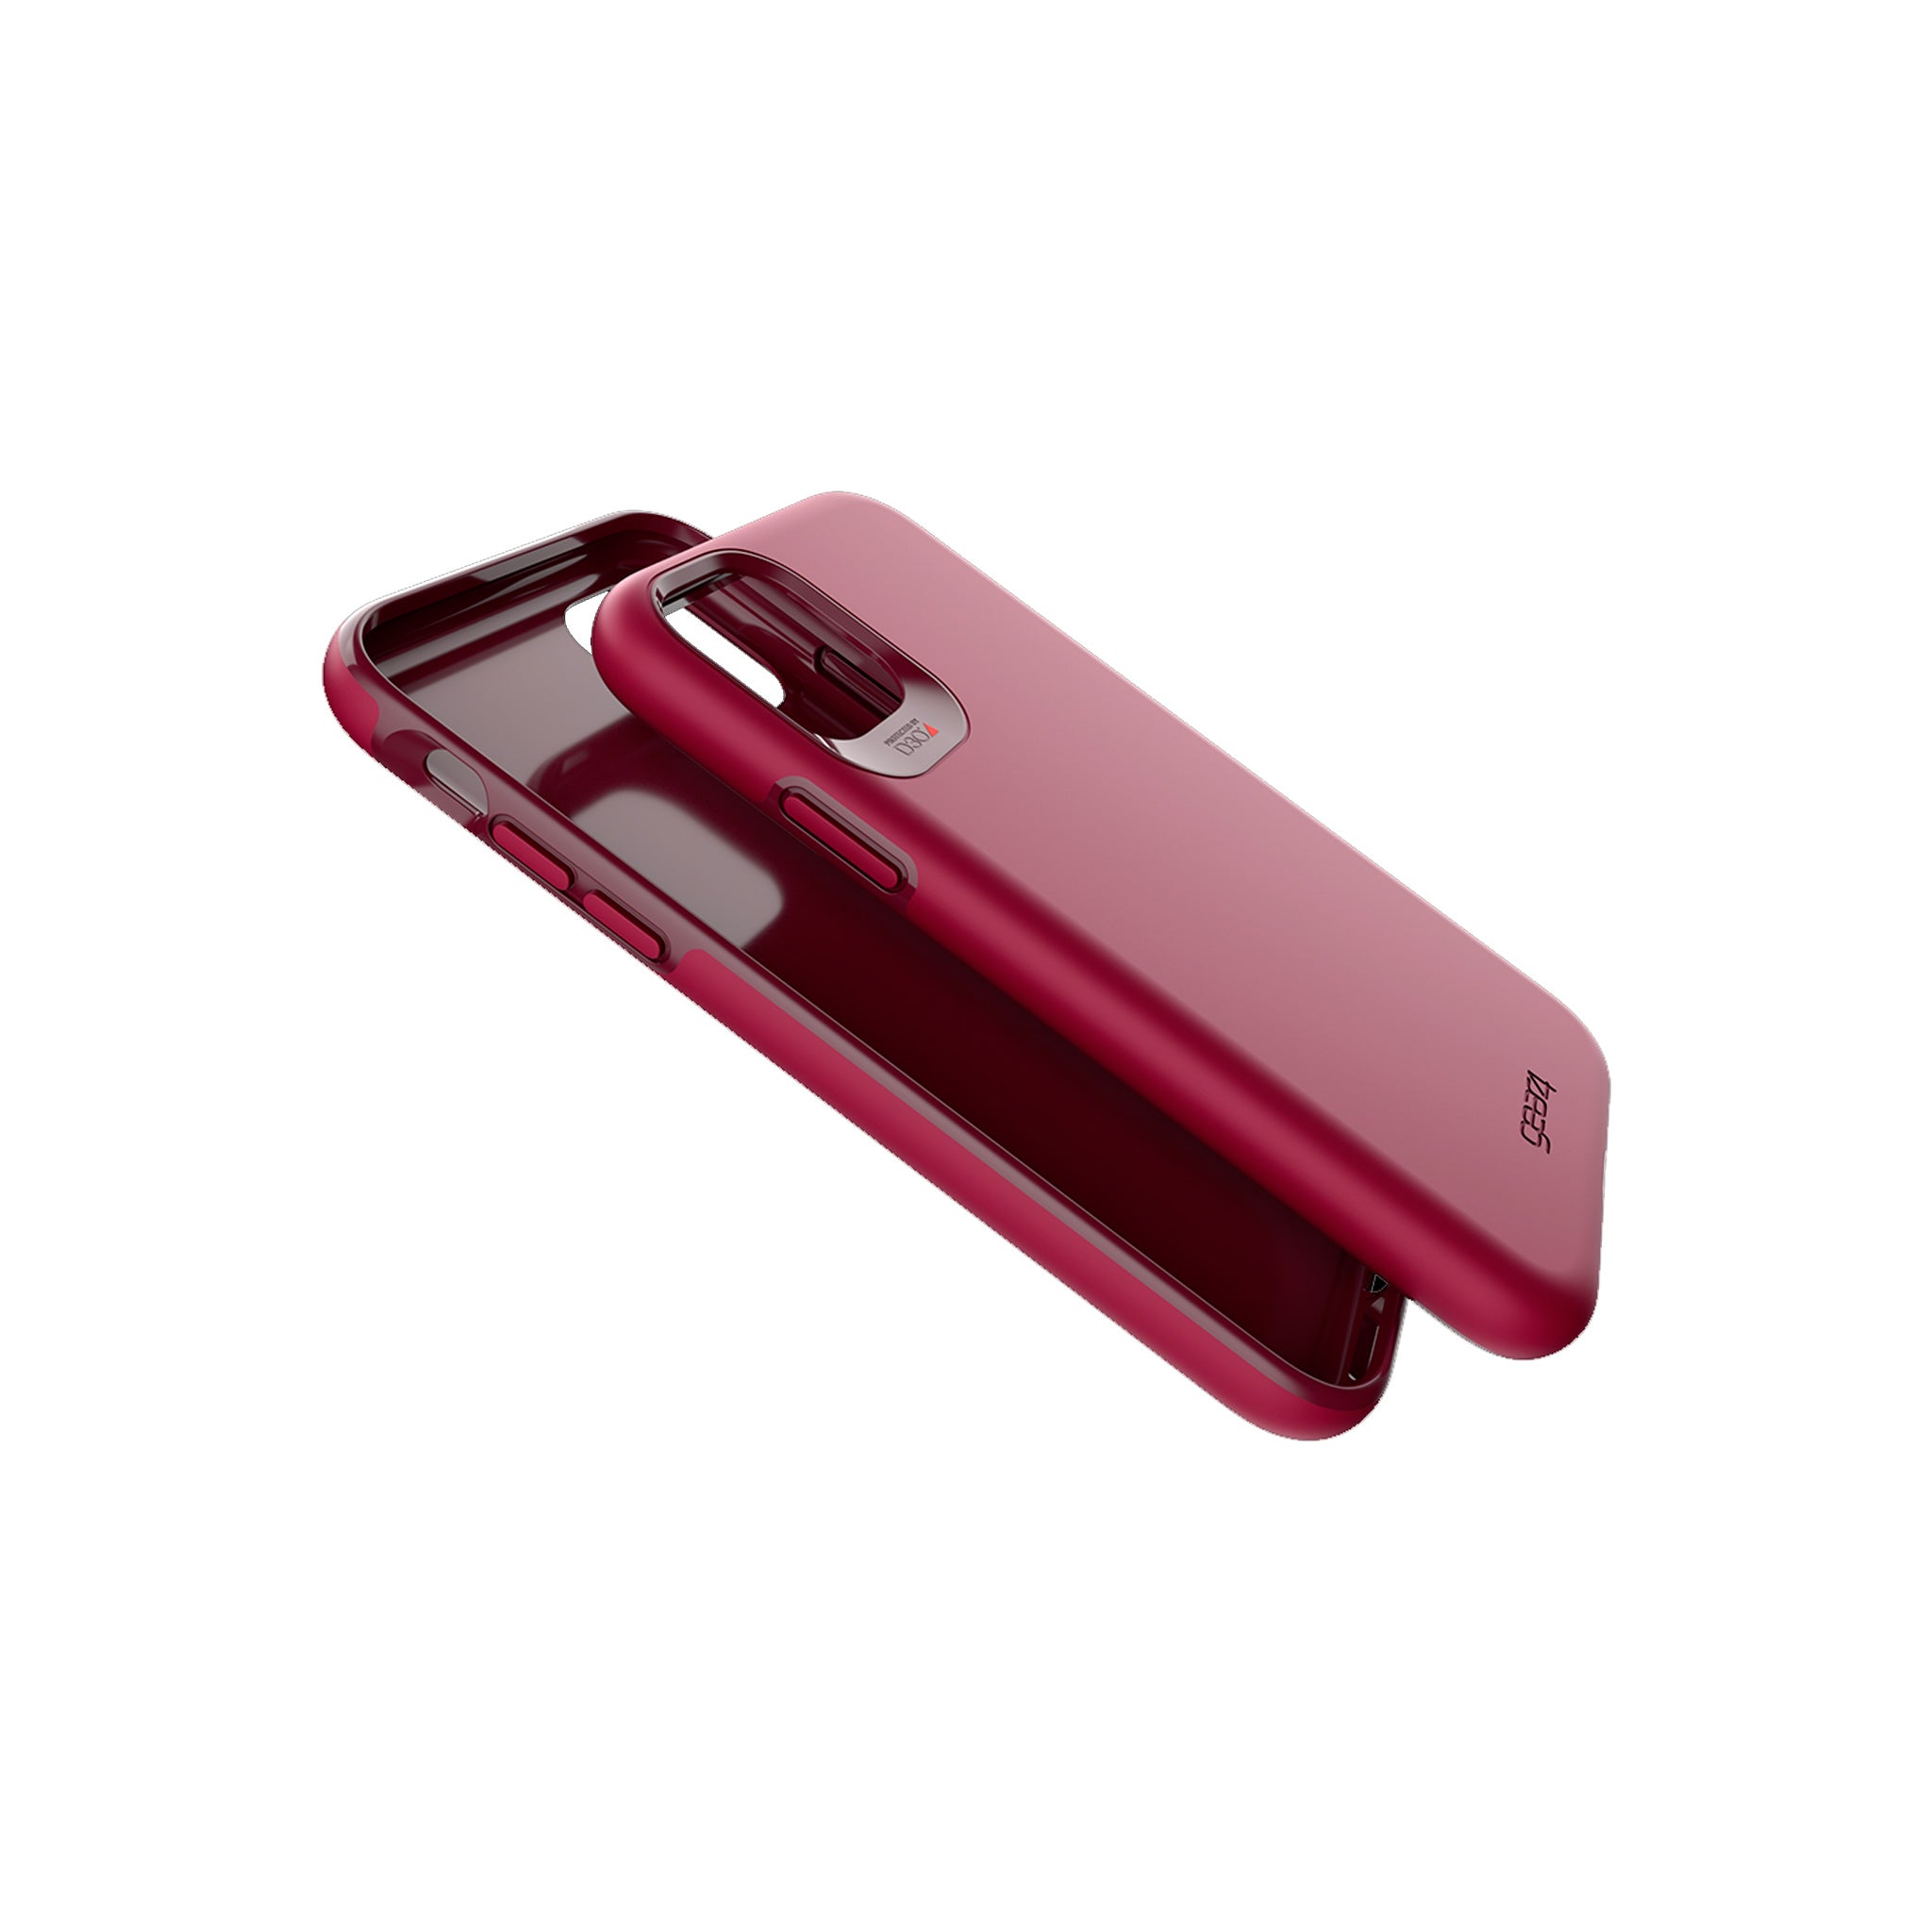 Gear4 - Holborn Case For Apple Iphone 11 - Burgundy